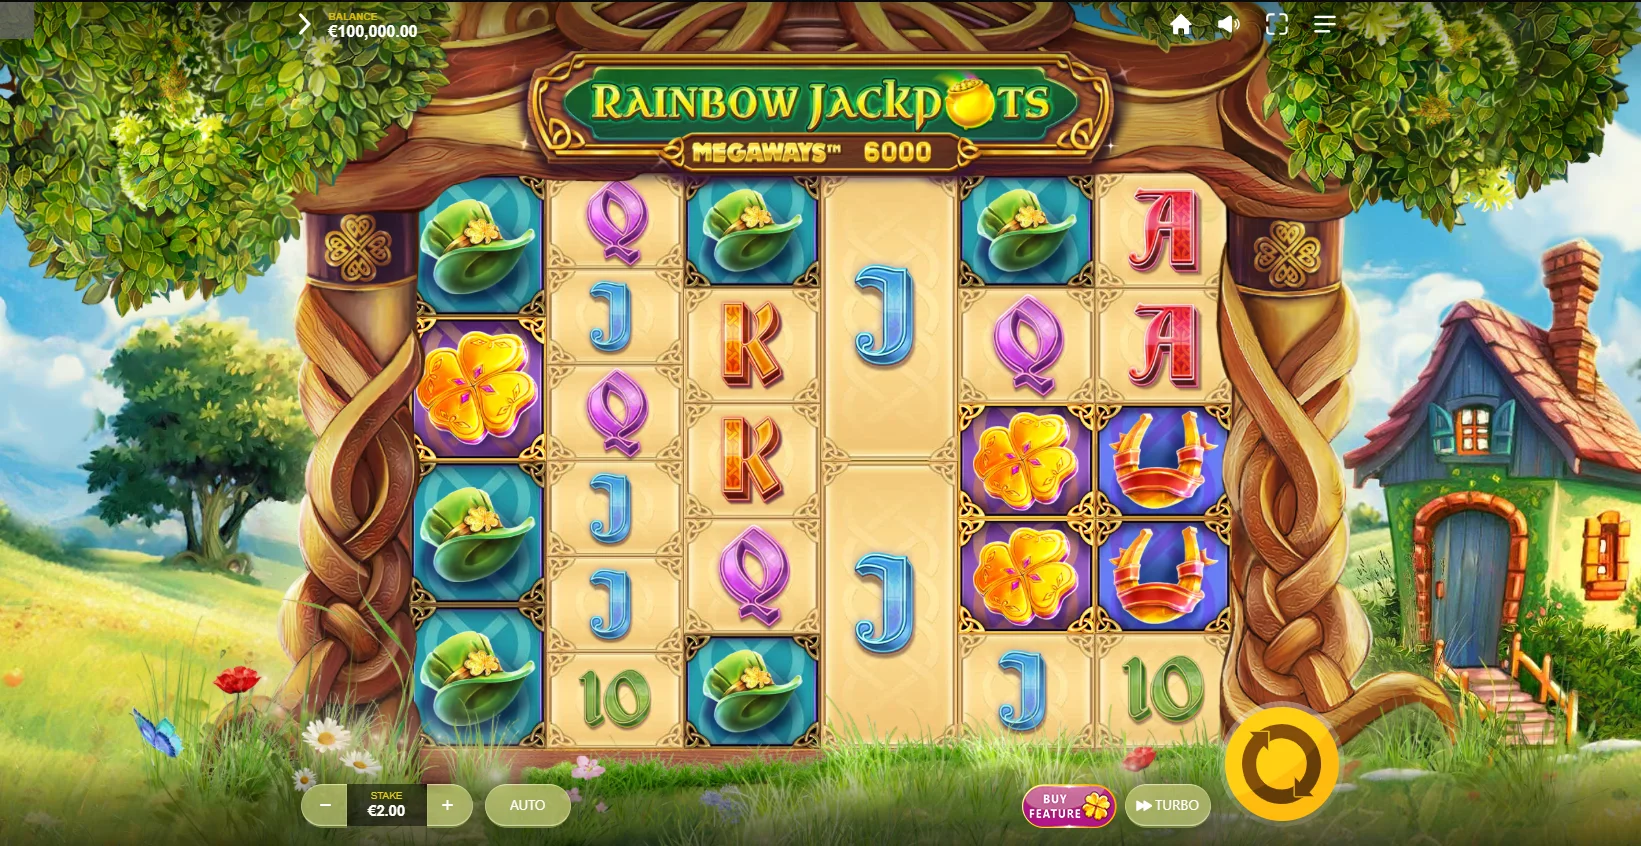 Rainbow Jackpots Megaways Base Game